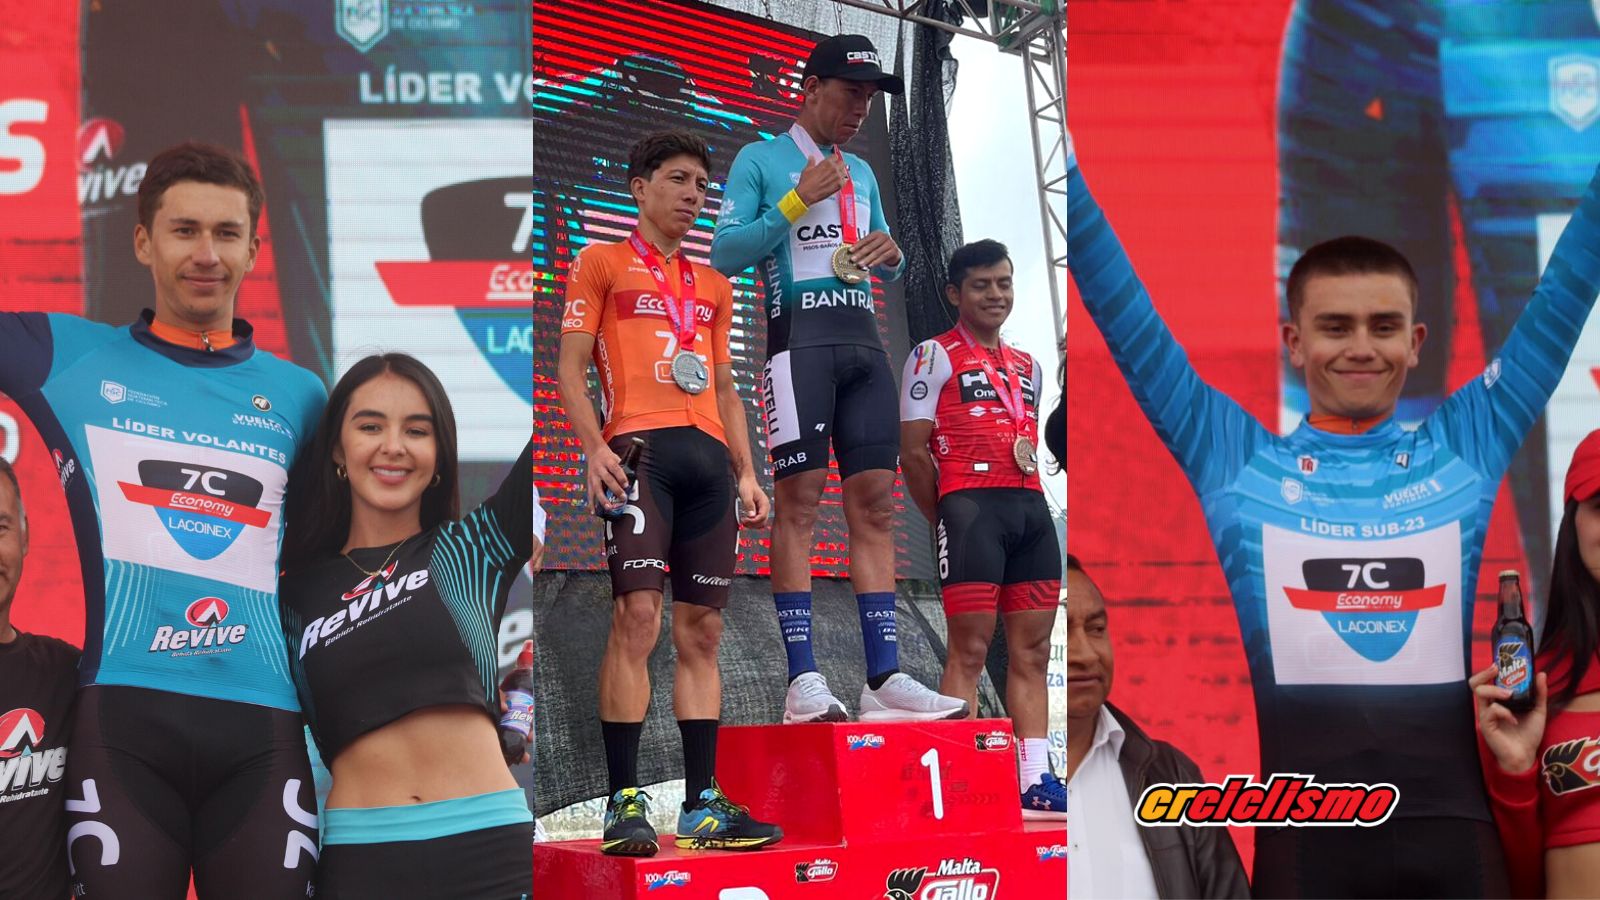 7C Economy Lacoinex brilló en la séptima etapa de la Vuelta a Guatemala